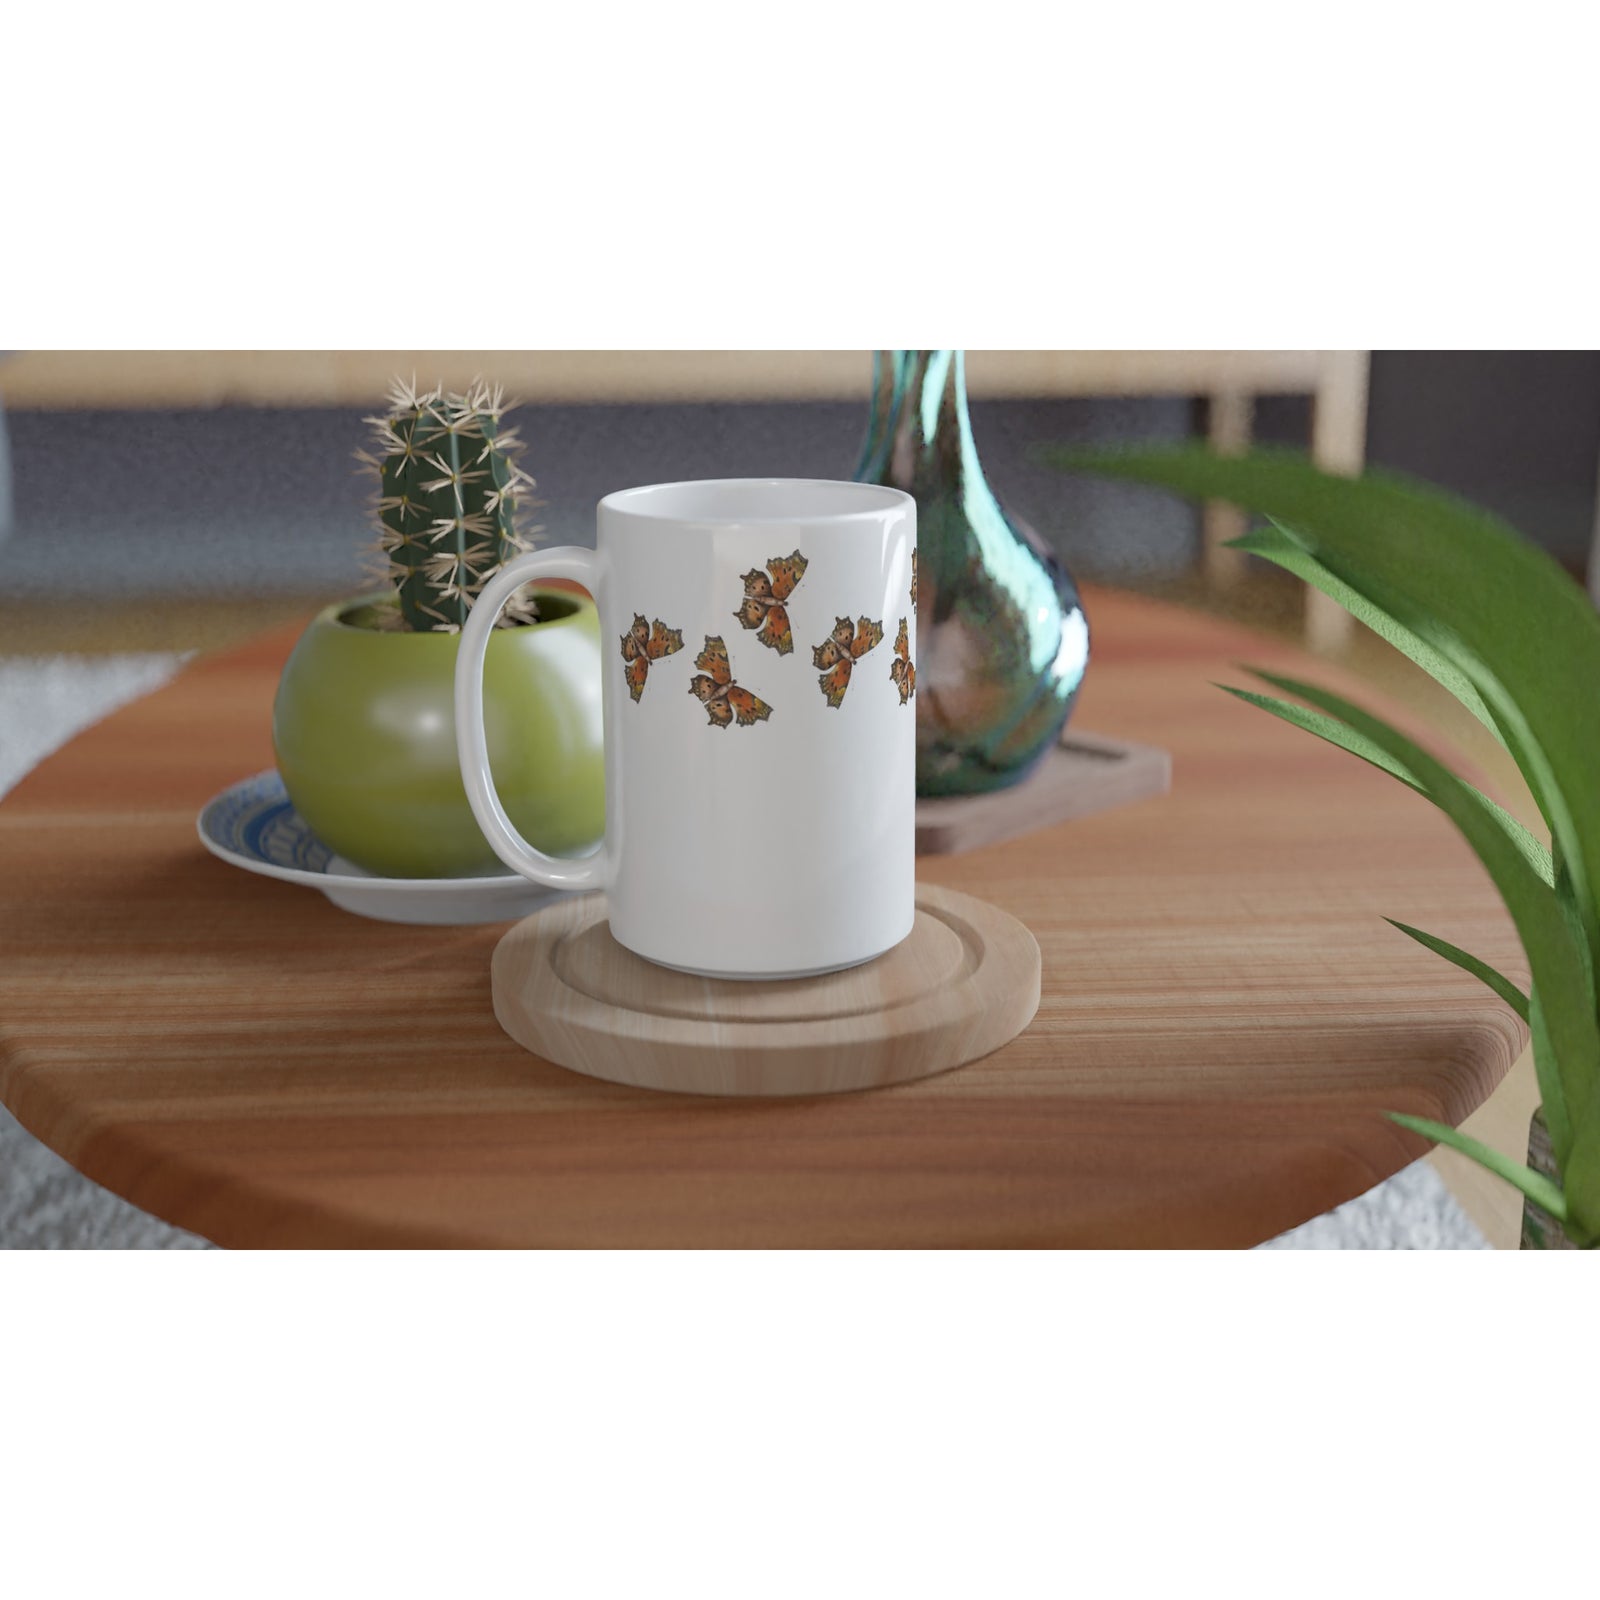 Ceramic mug 15oz green coma butterfly pattern